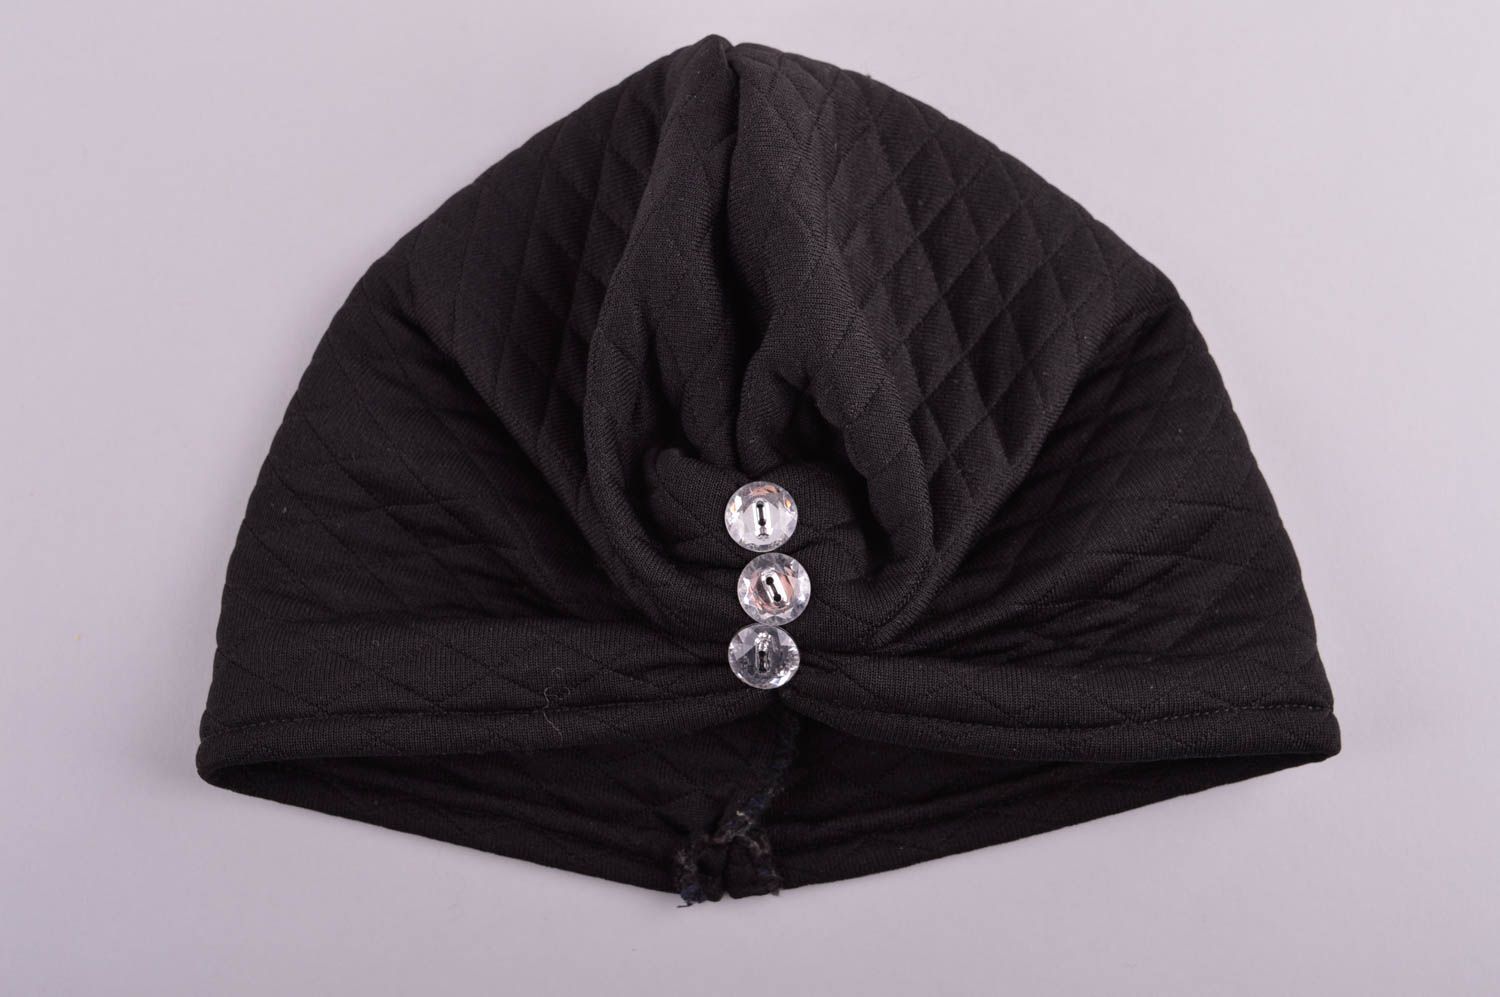 Handmade winter hat fabric hats black warm hat winter accessories for women photo 4